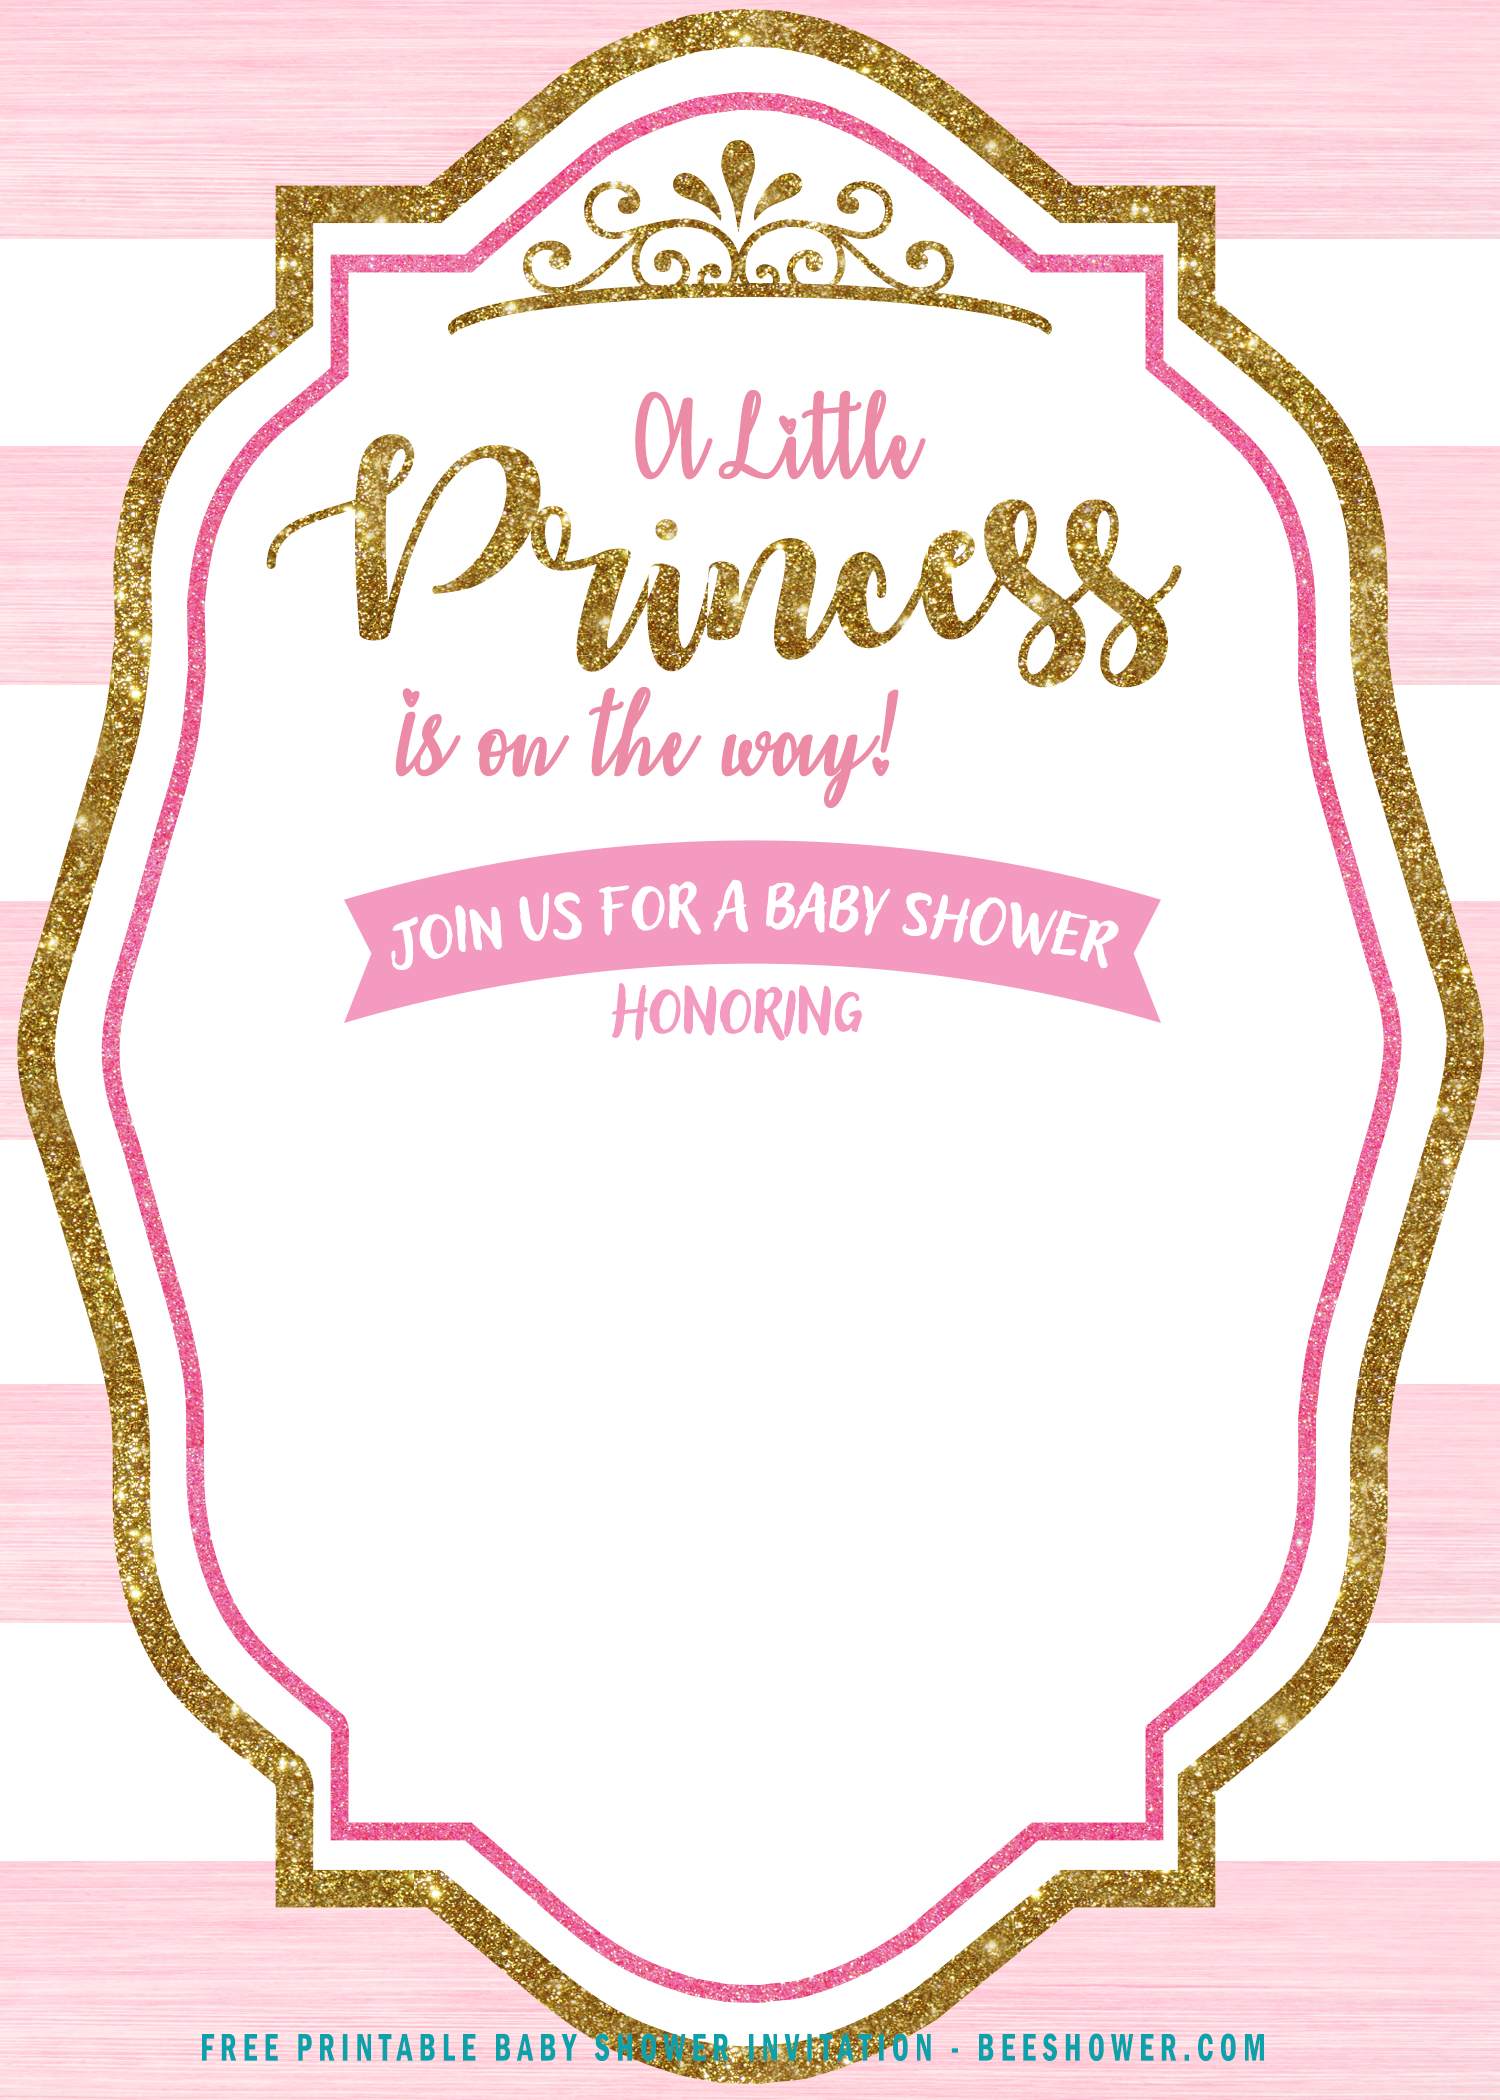 princess baby shower invitation wording